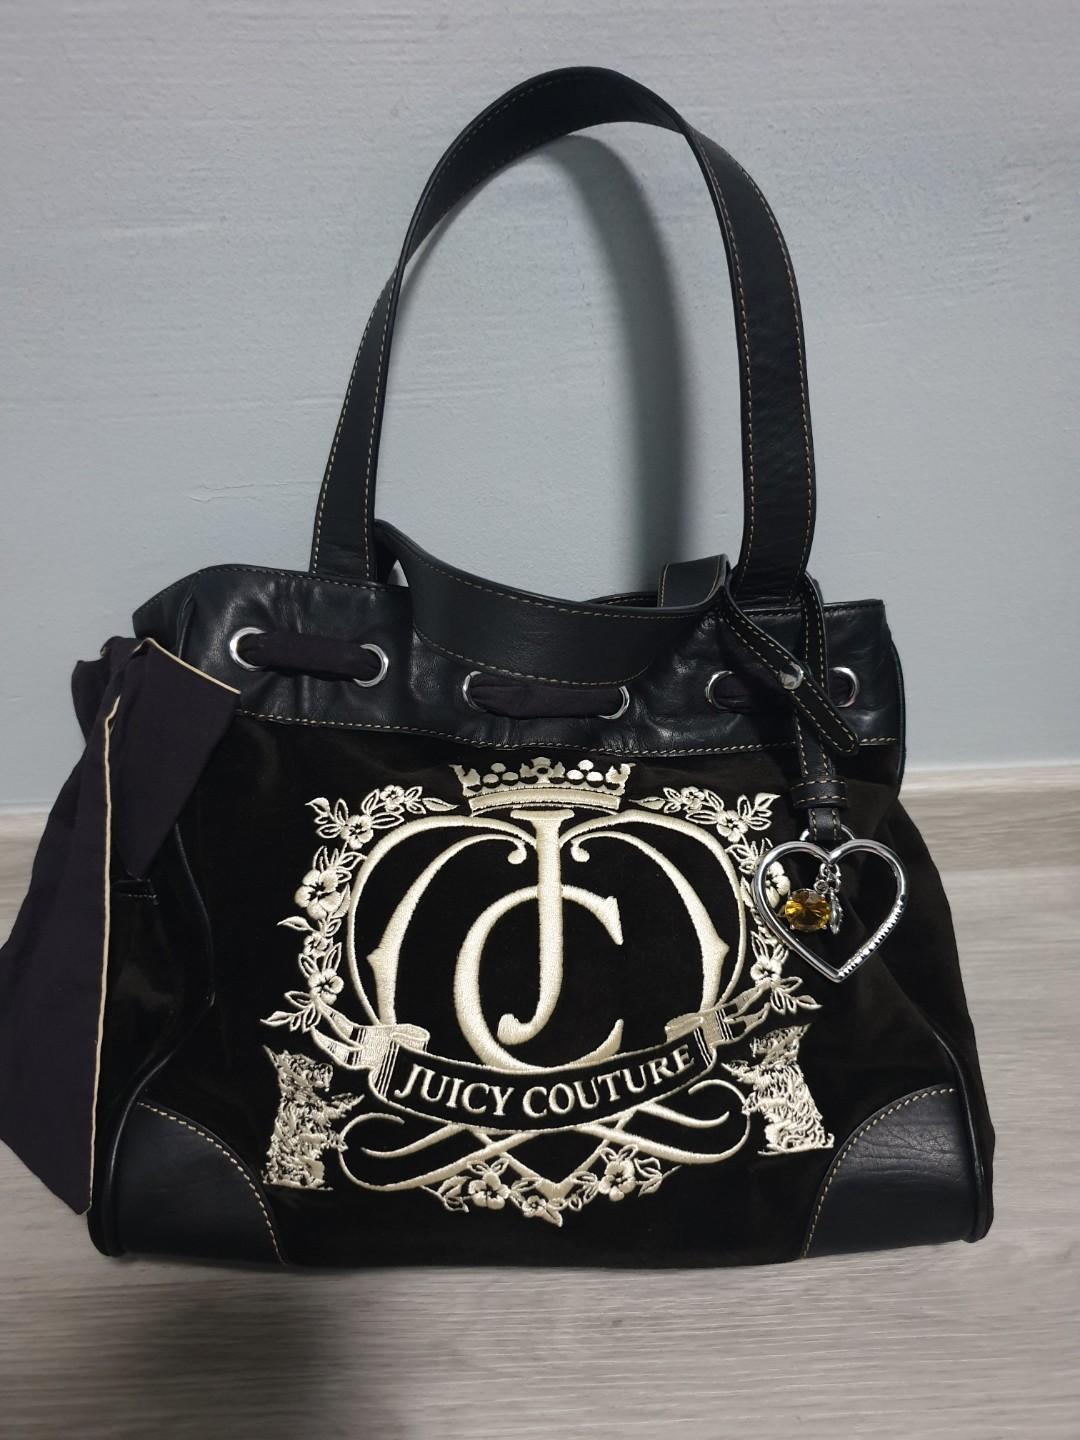 JUICY COUTURE Large Black Bag Purse Pocketbook Deboss LOGO Day Dream Coho  R$70 | eBay